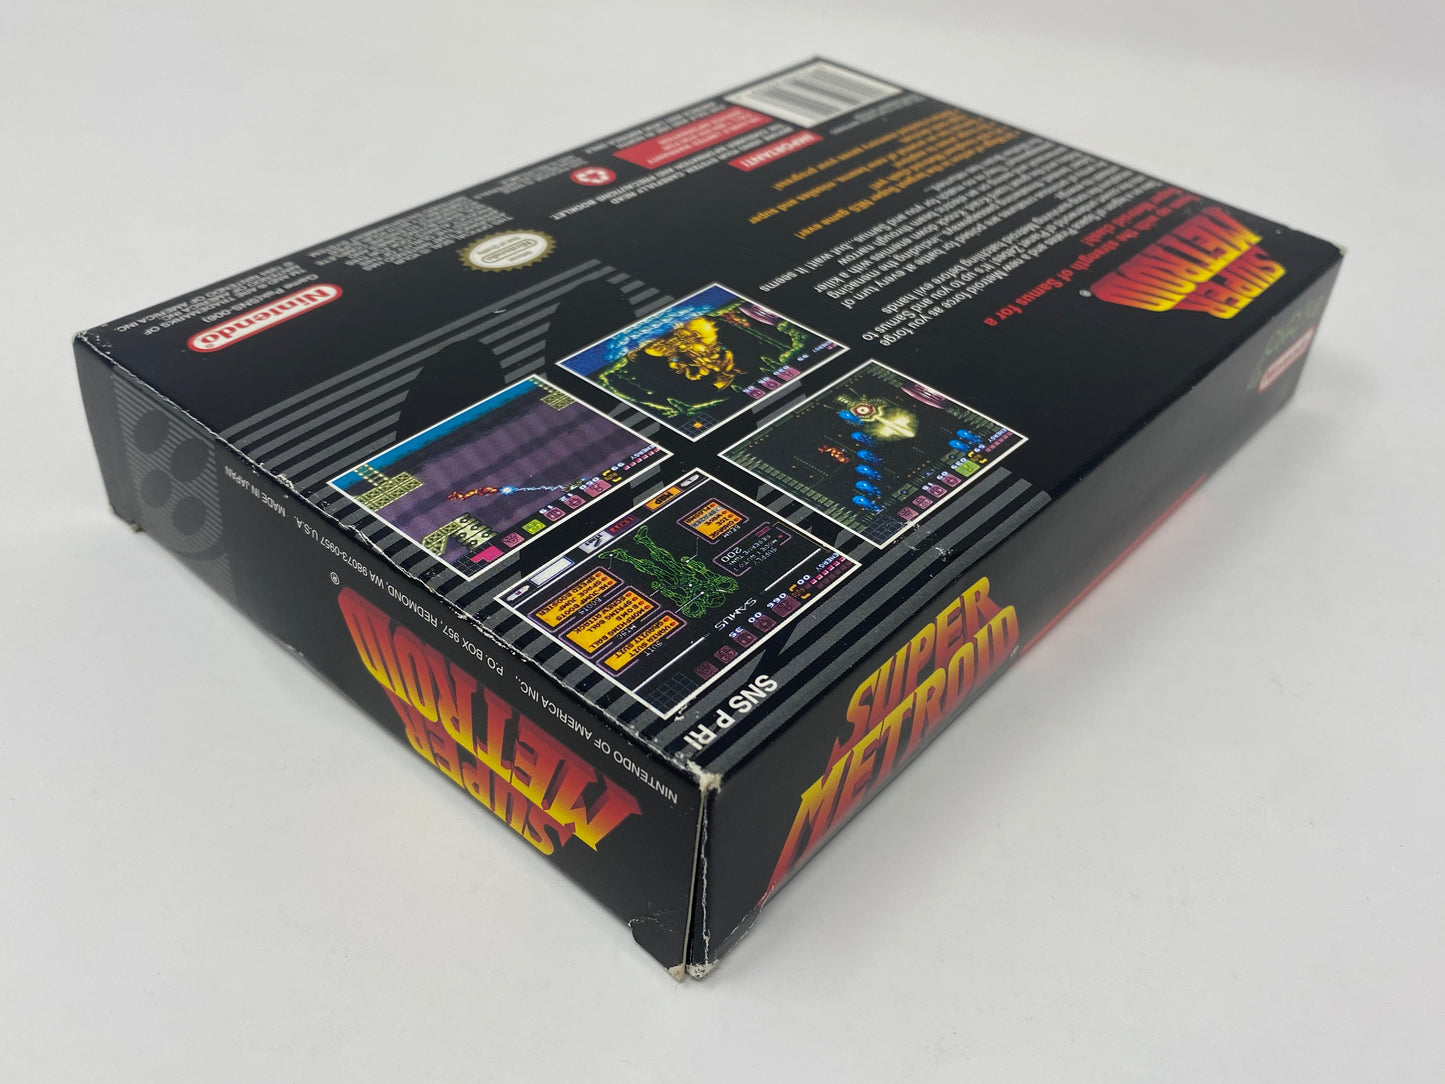 SNES Super Nintendo - Super Metroid - CIB Complete in Box